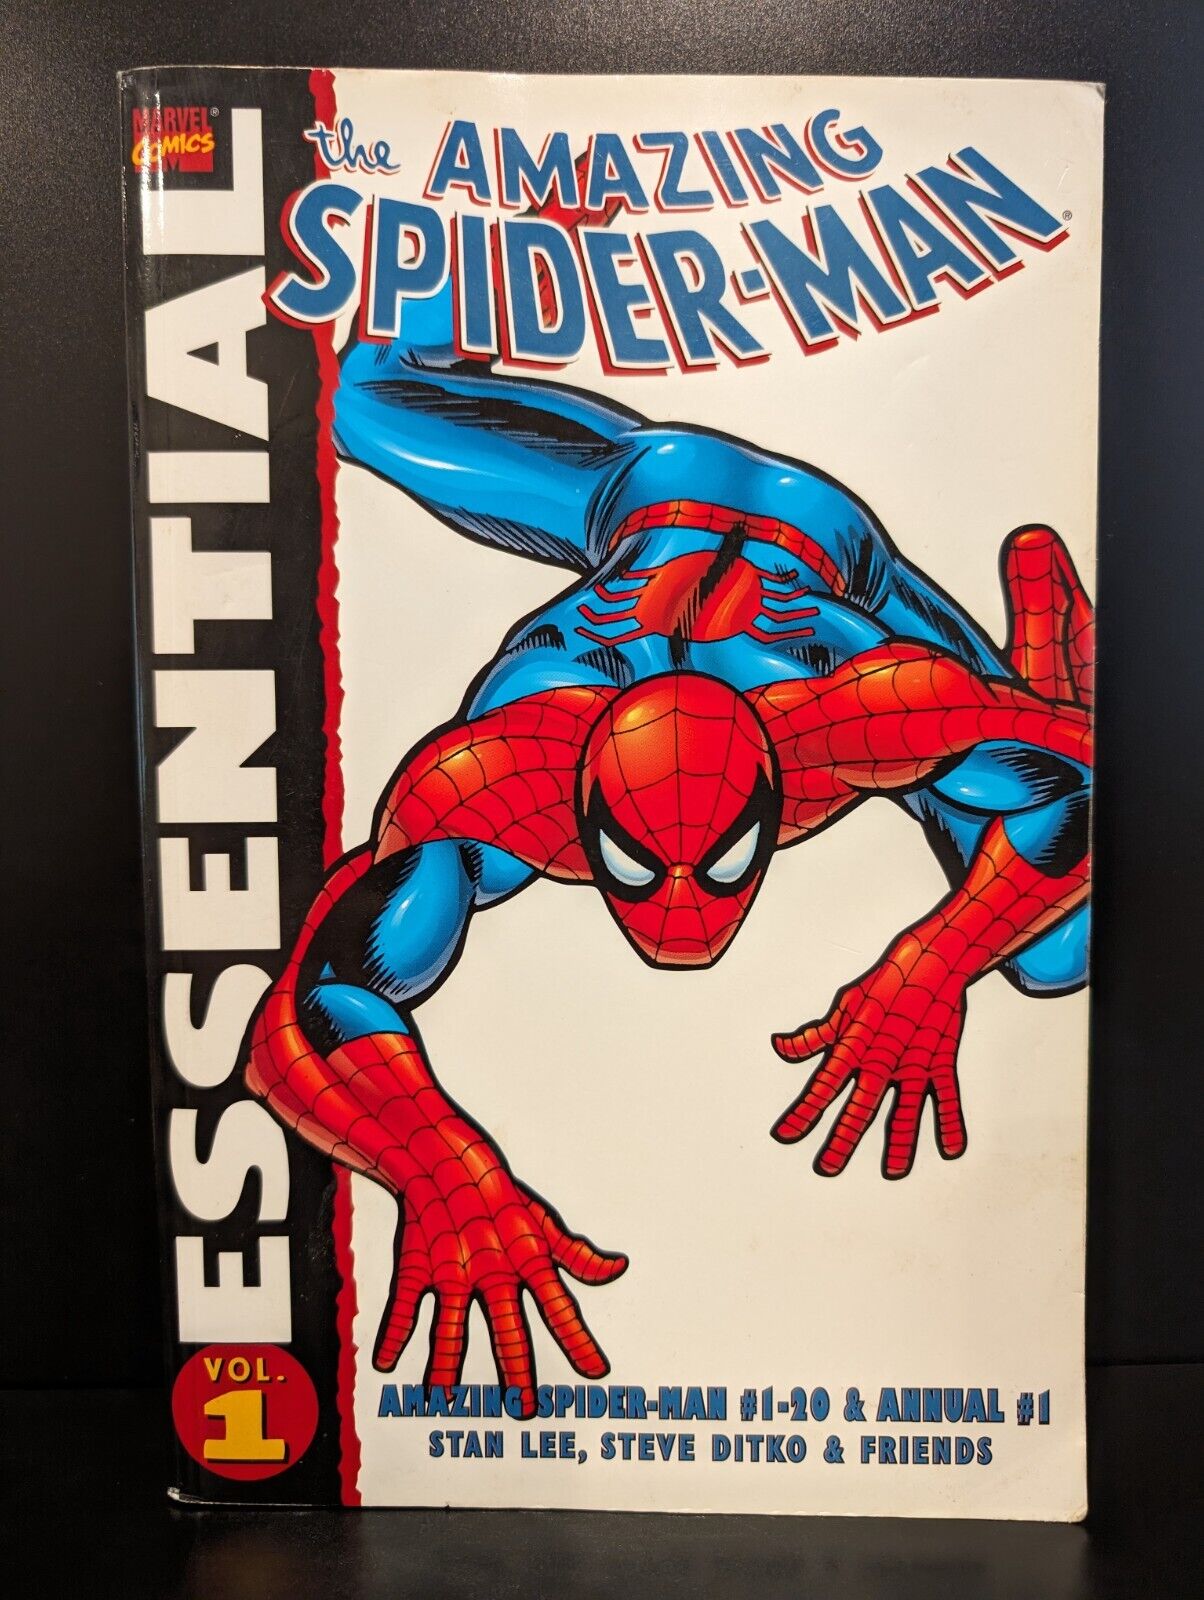 ESSENTIAL AMAZING SPIDER-MAN vol 1 AMAZING FANTASY 15 & SPIDERMAN 1-20 READING